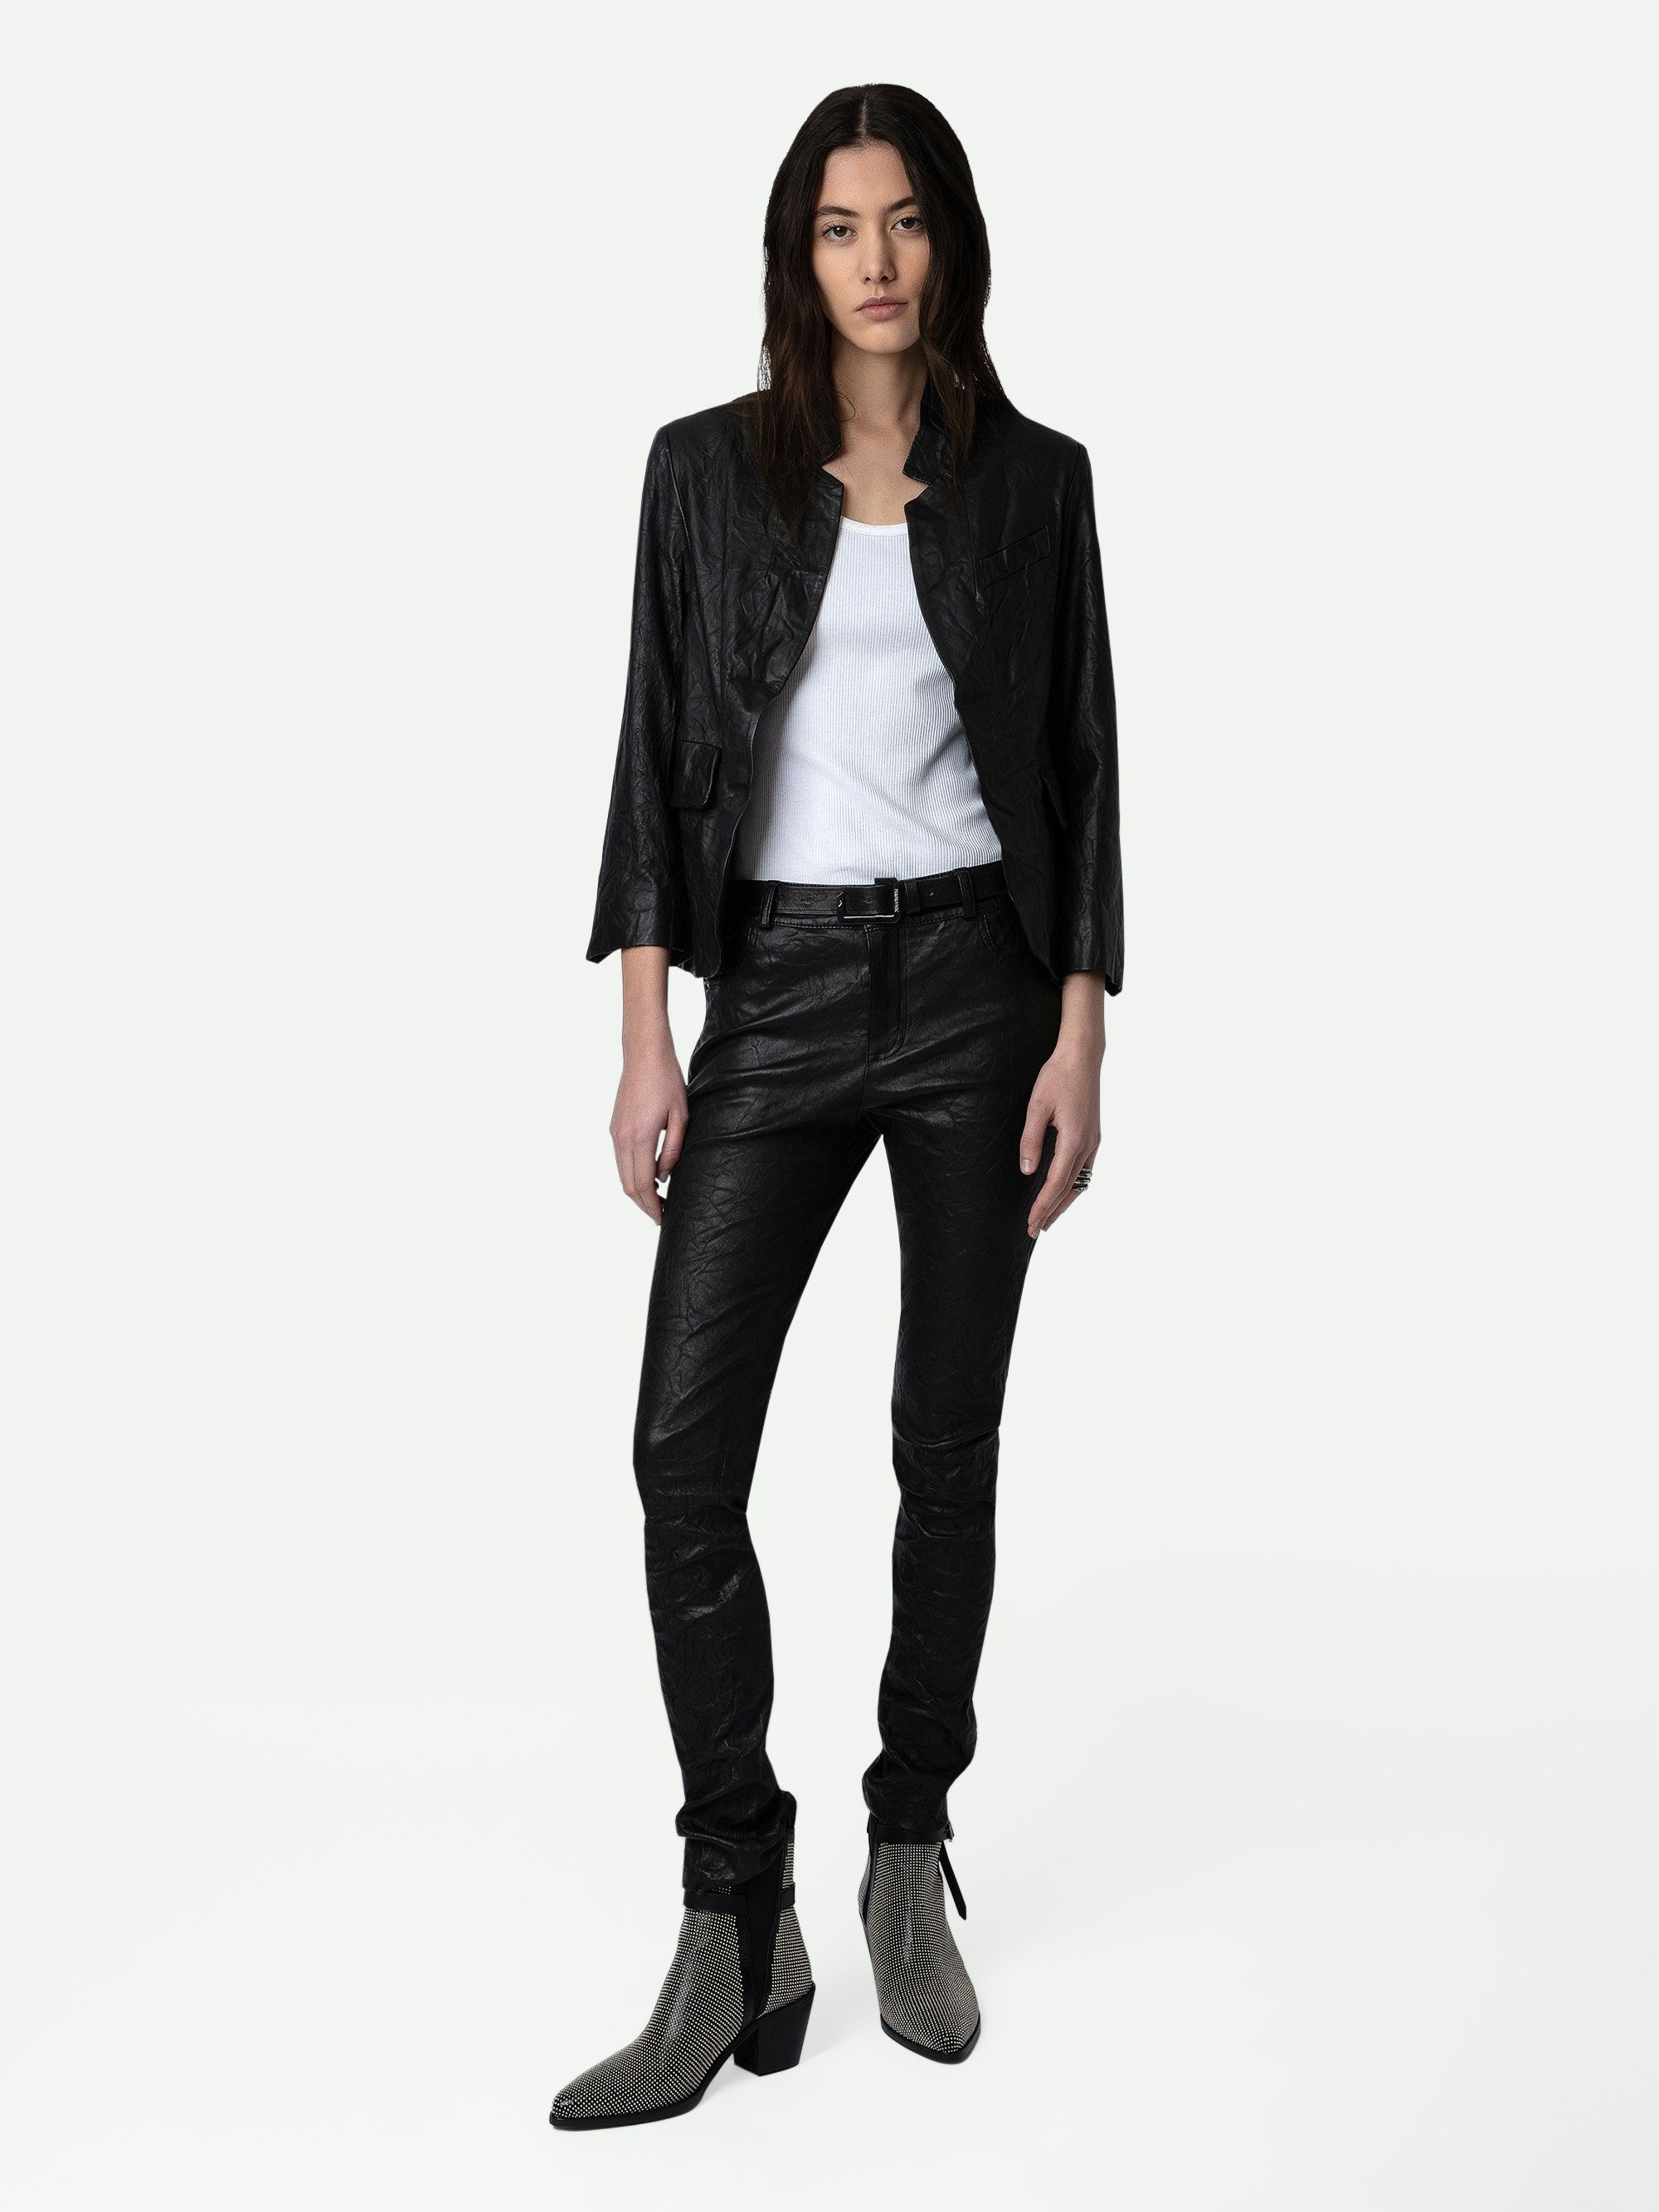 Verys Blazer Crinkled Leather - Women’s black leather jacket.